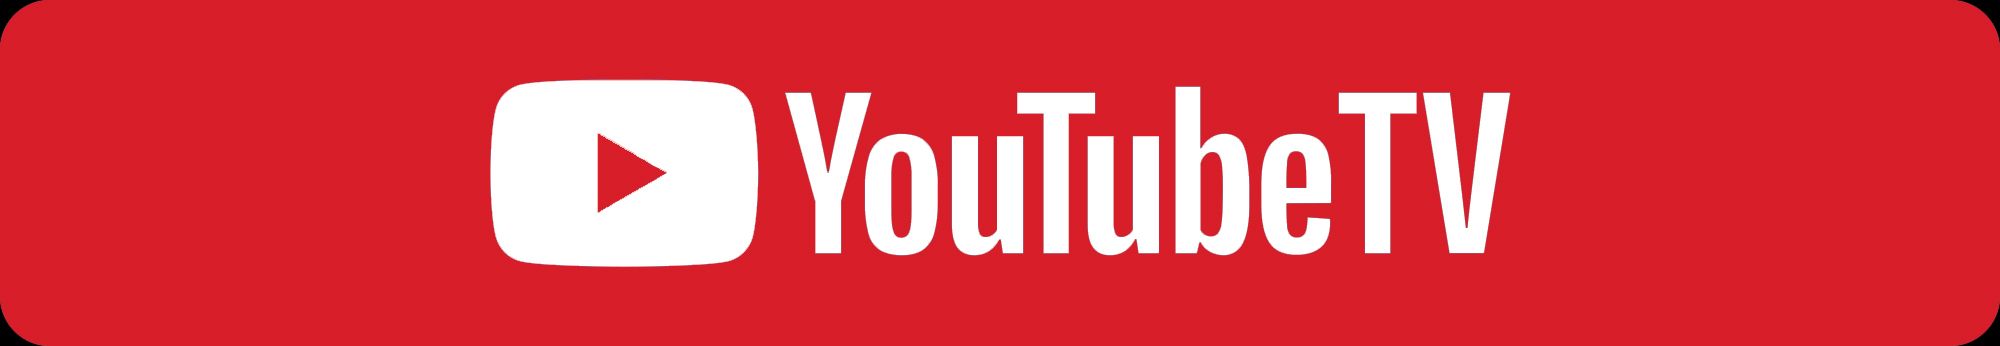 youtube tv with redzone